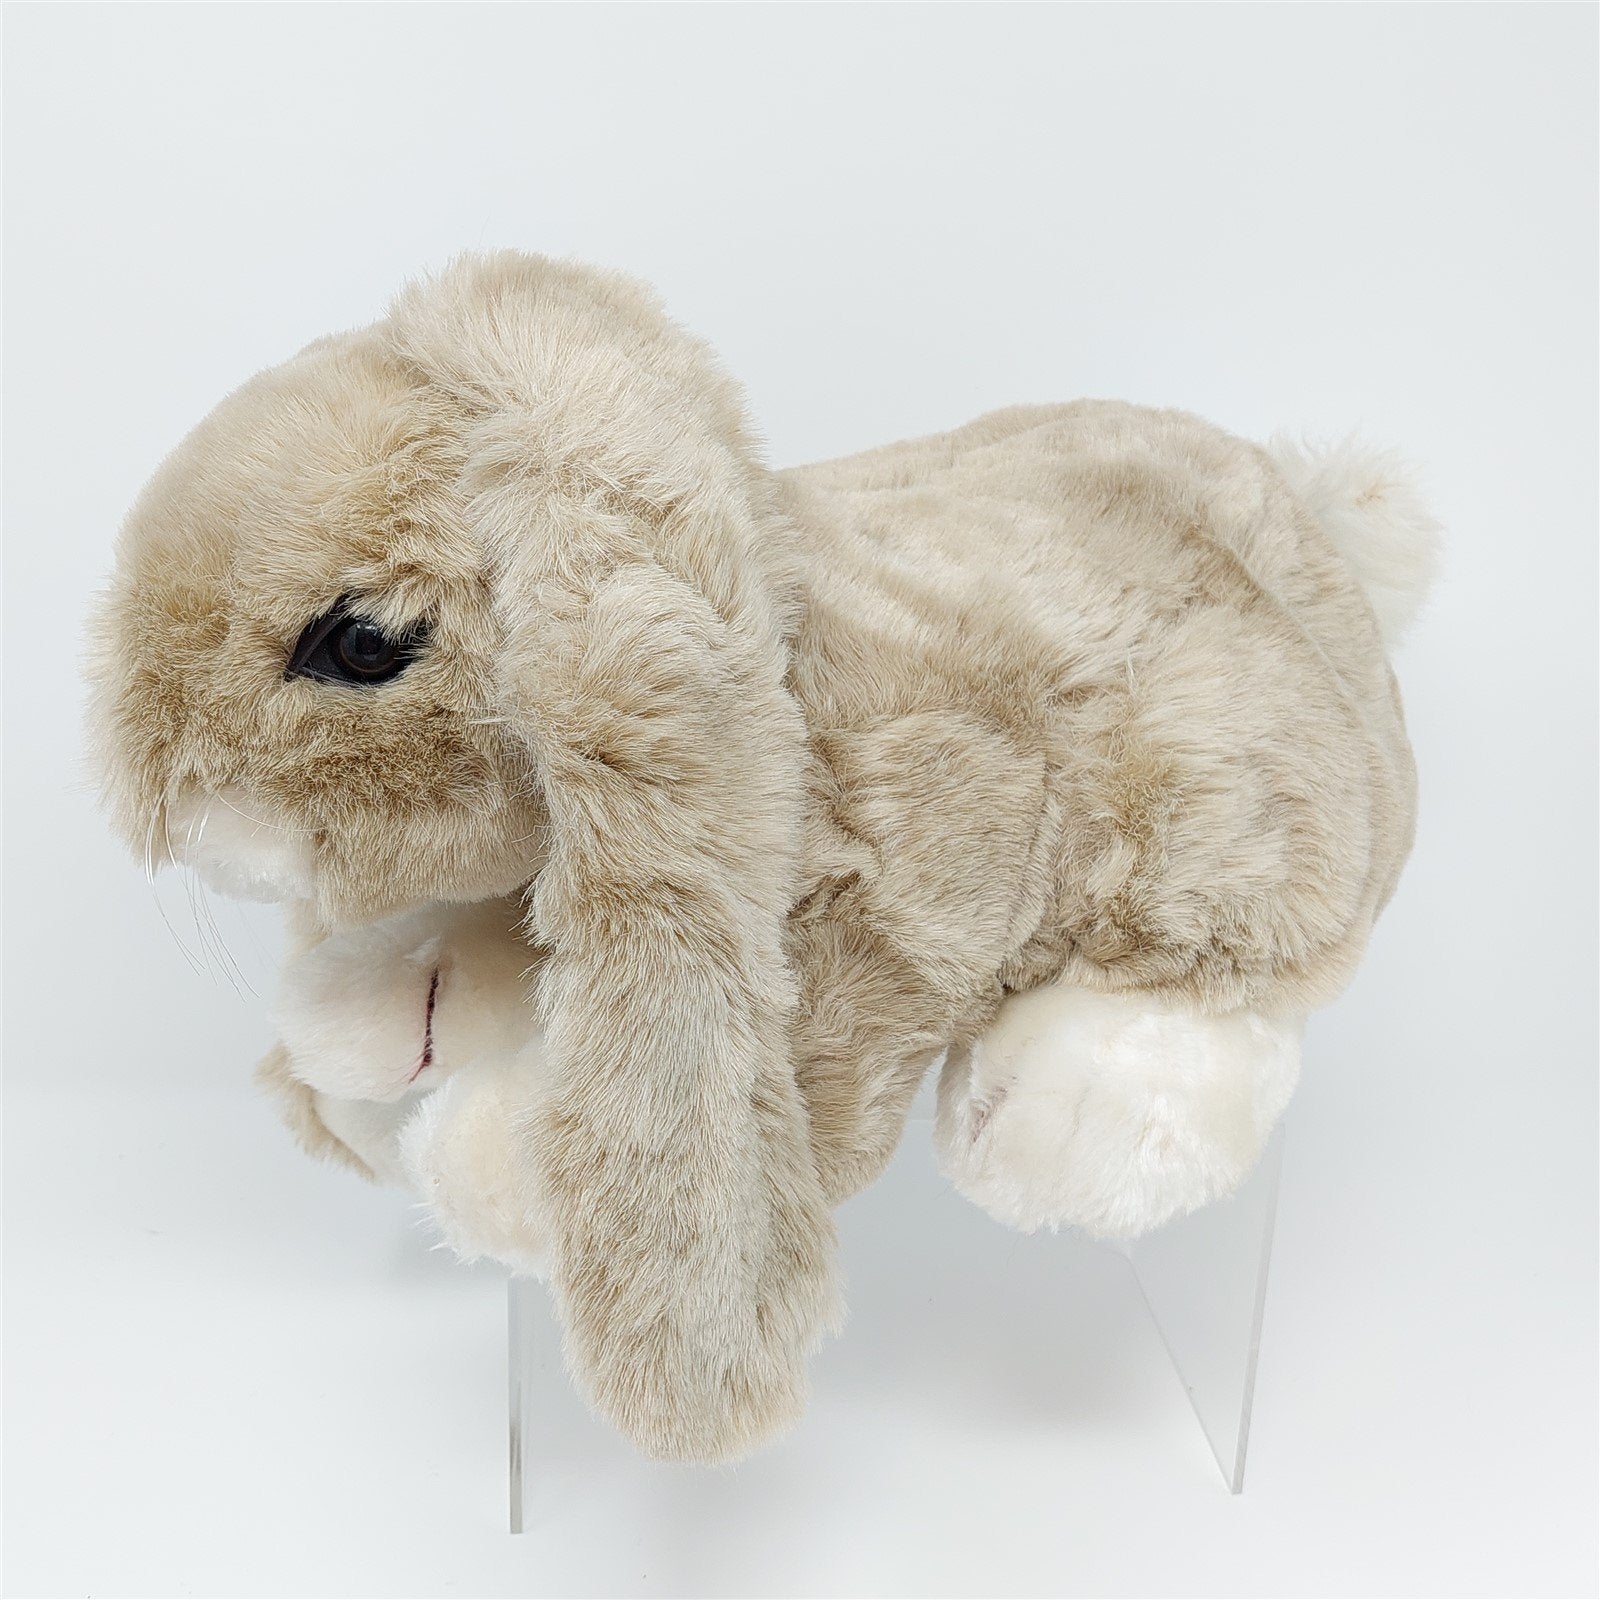 Bunny Rabbit Floppy Ears Stuffed Plush Toy by Applause 1988 Original Tag